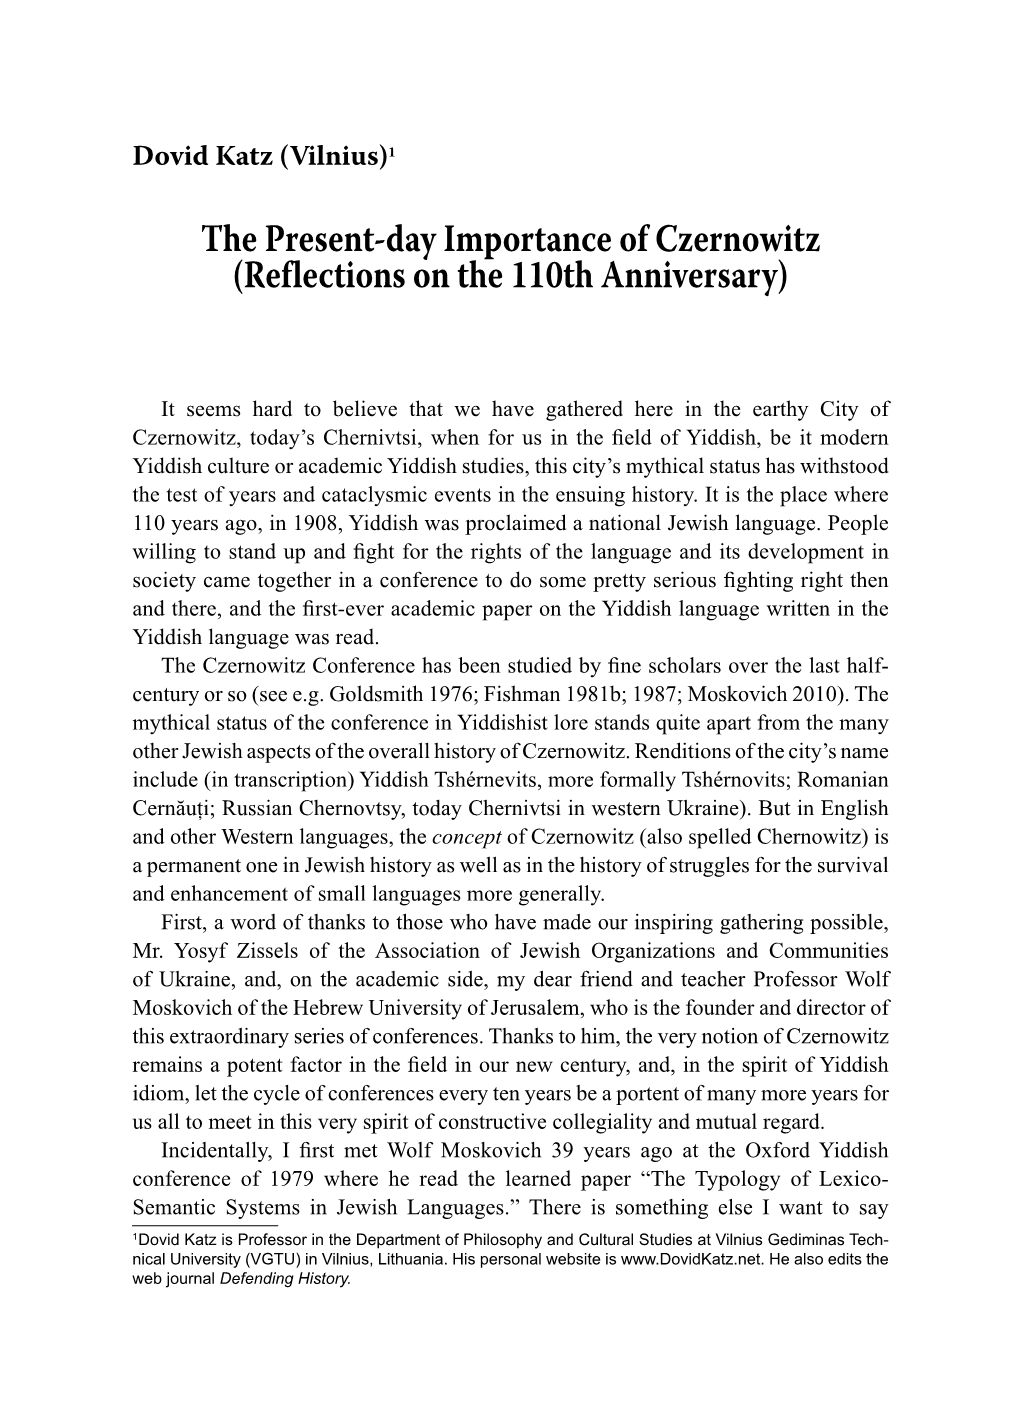 Reflections on Czernowitz At